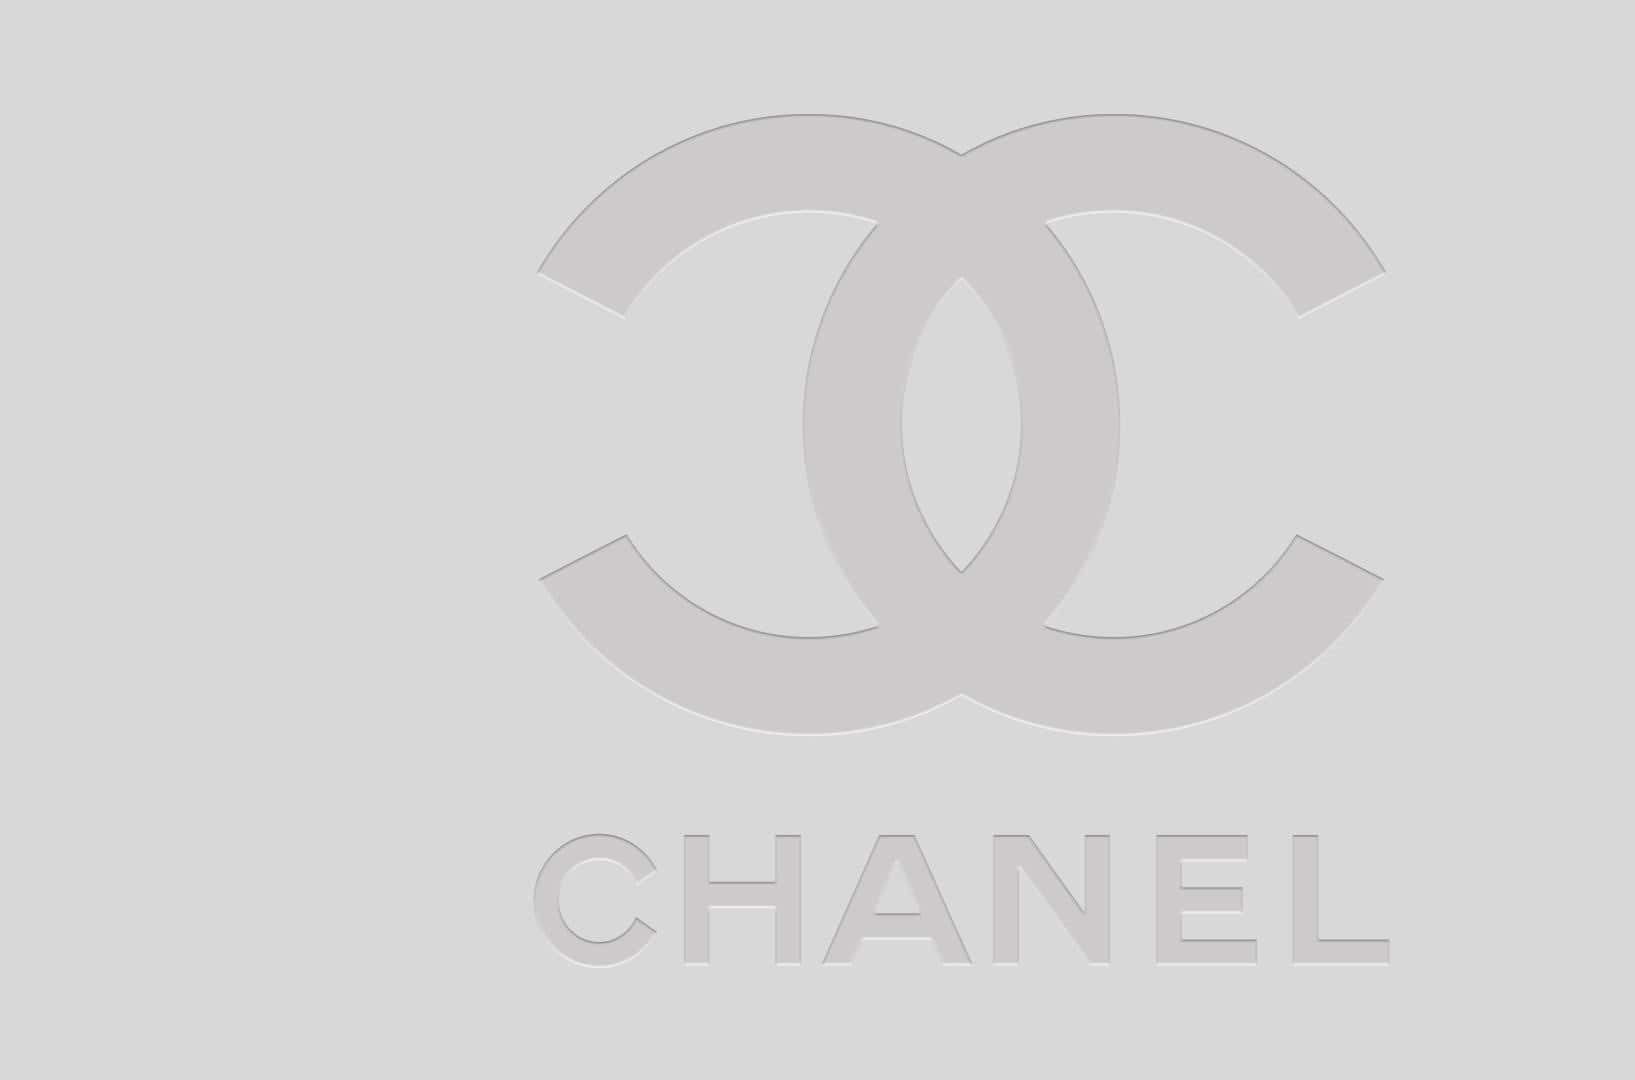 Chanel Logo  ID 4292  Stickeescom